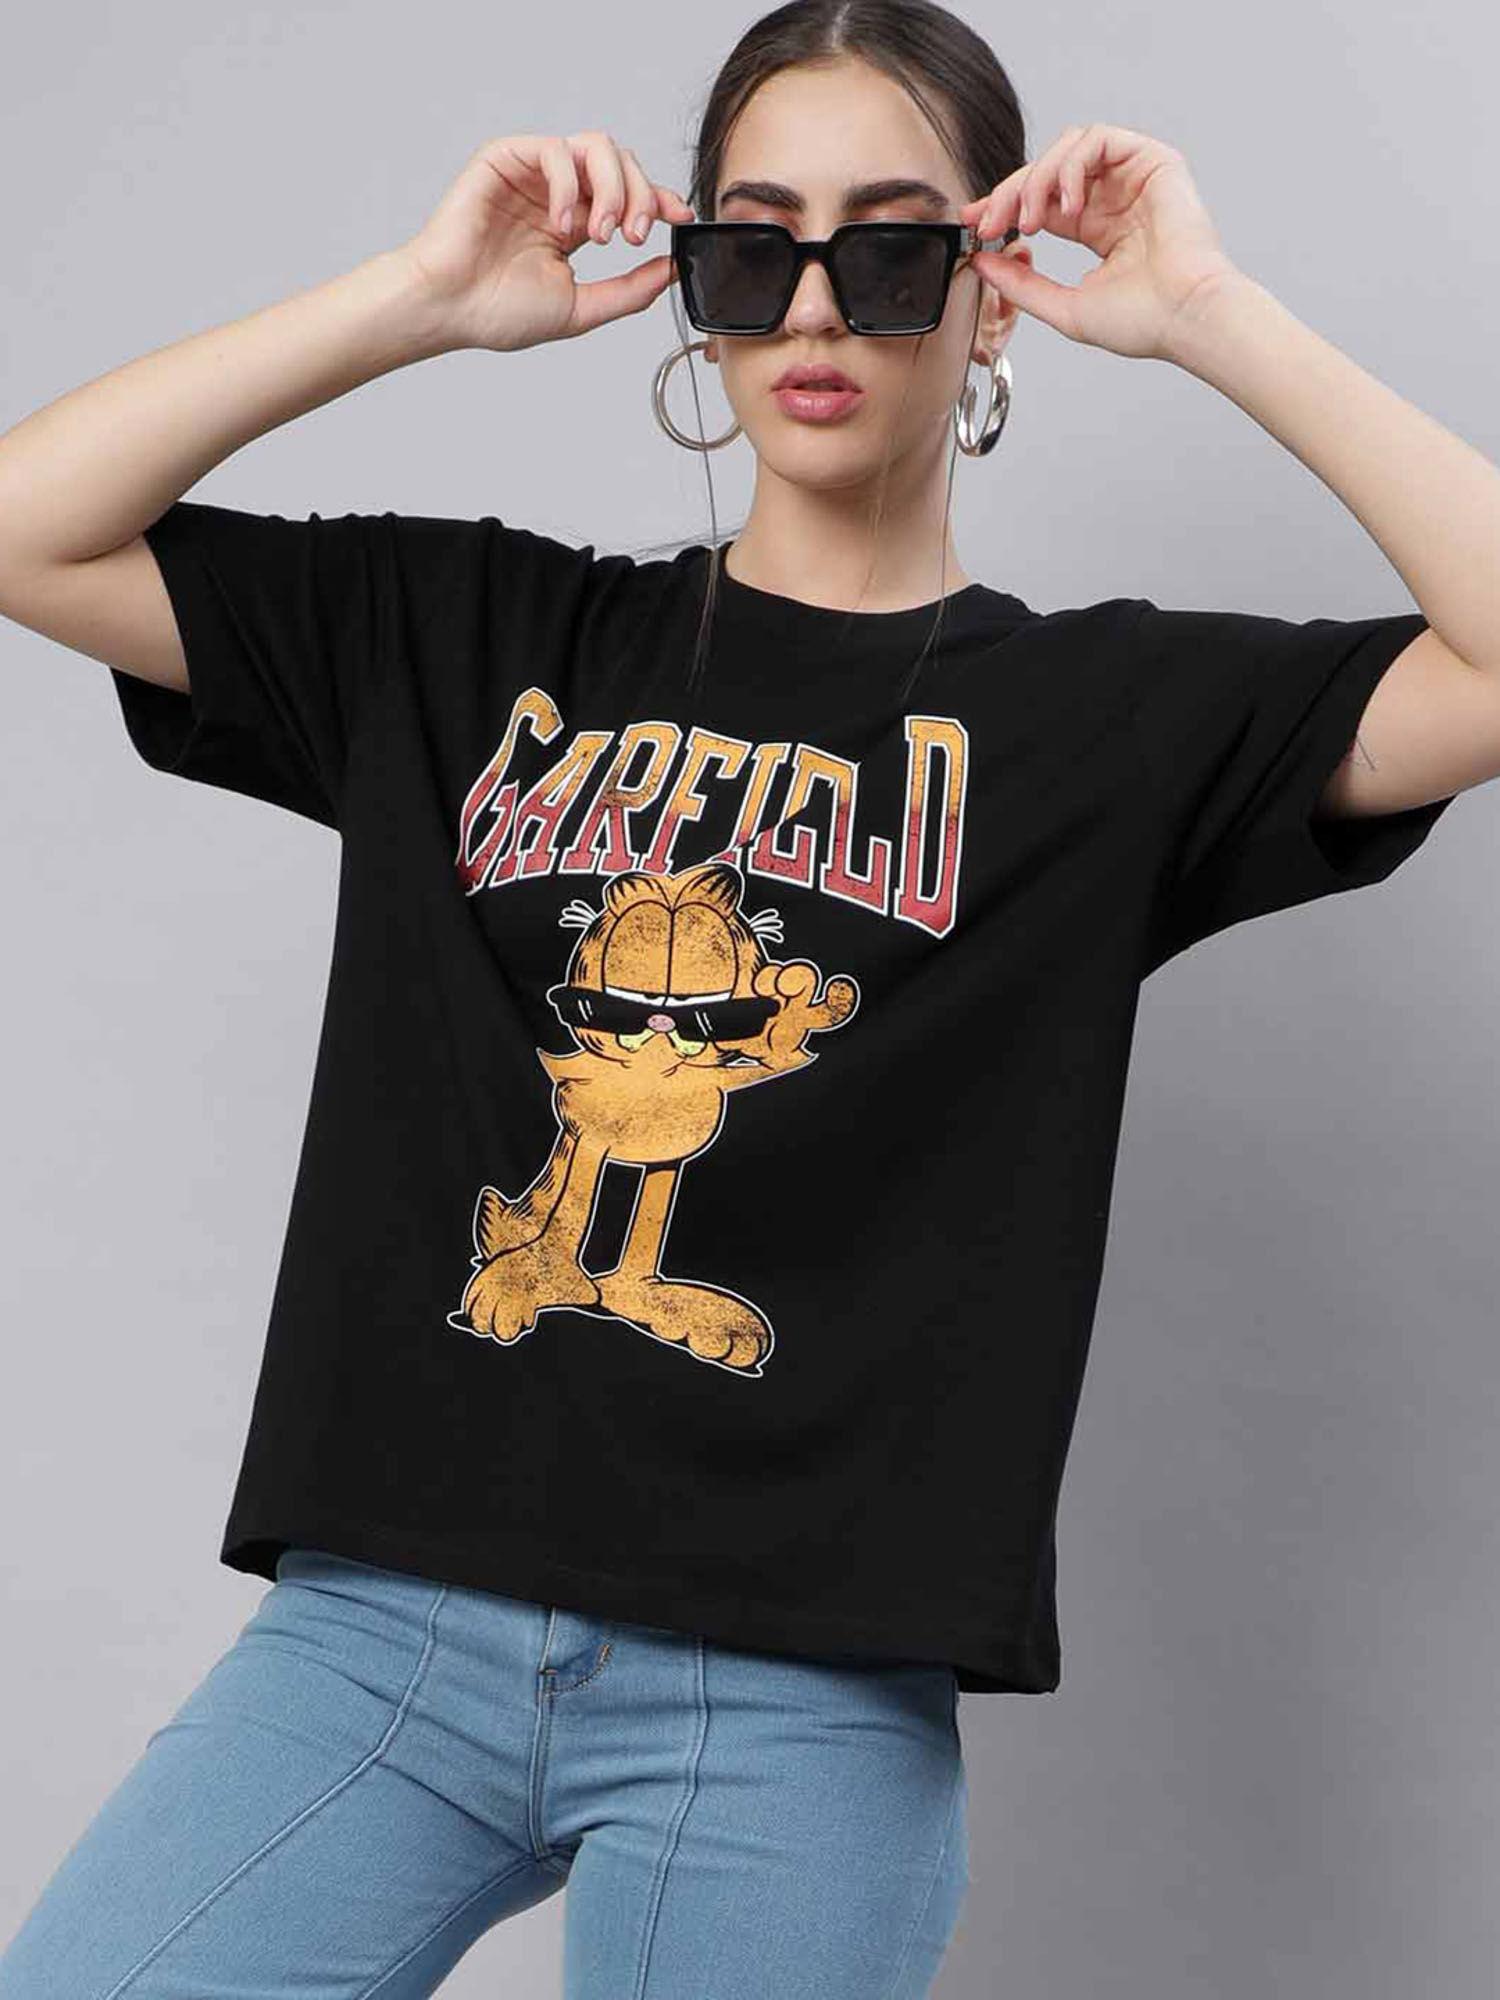 garfield printed black t-shirt for women